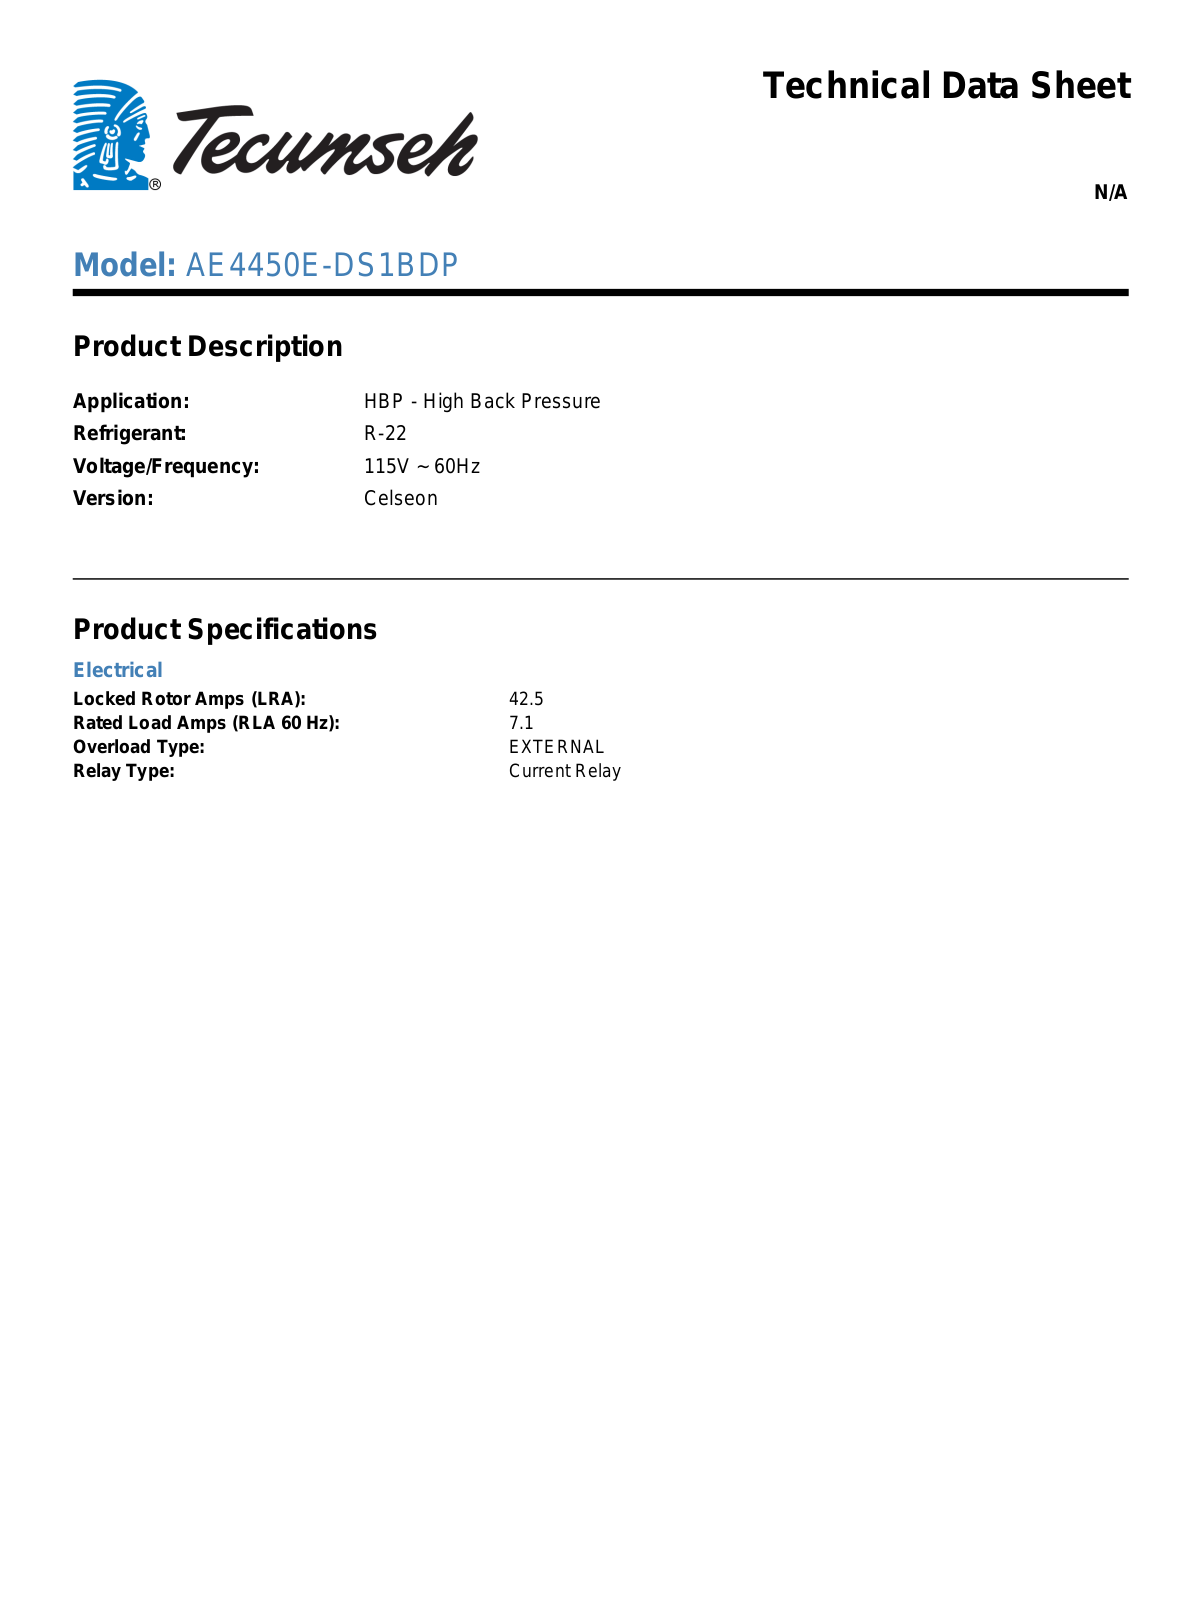 Tecumseh AE4450E-DS1BDP User Manual